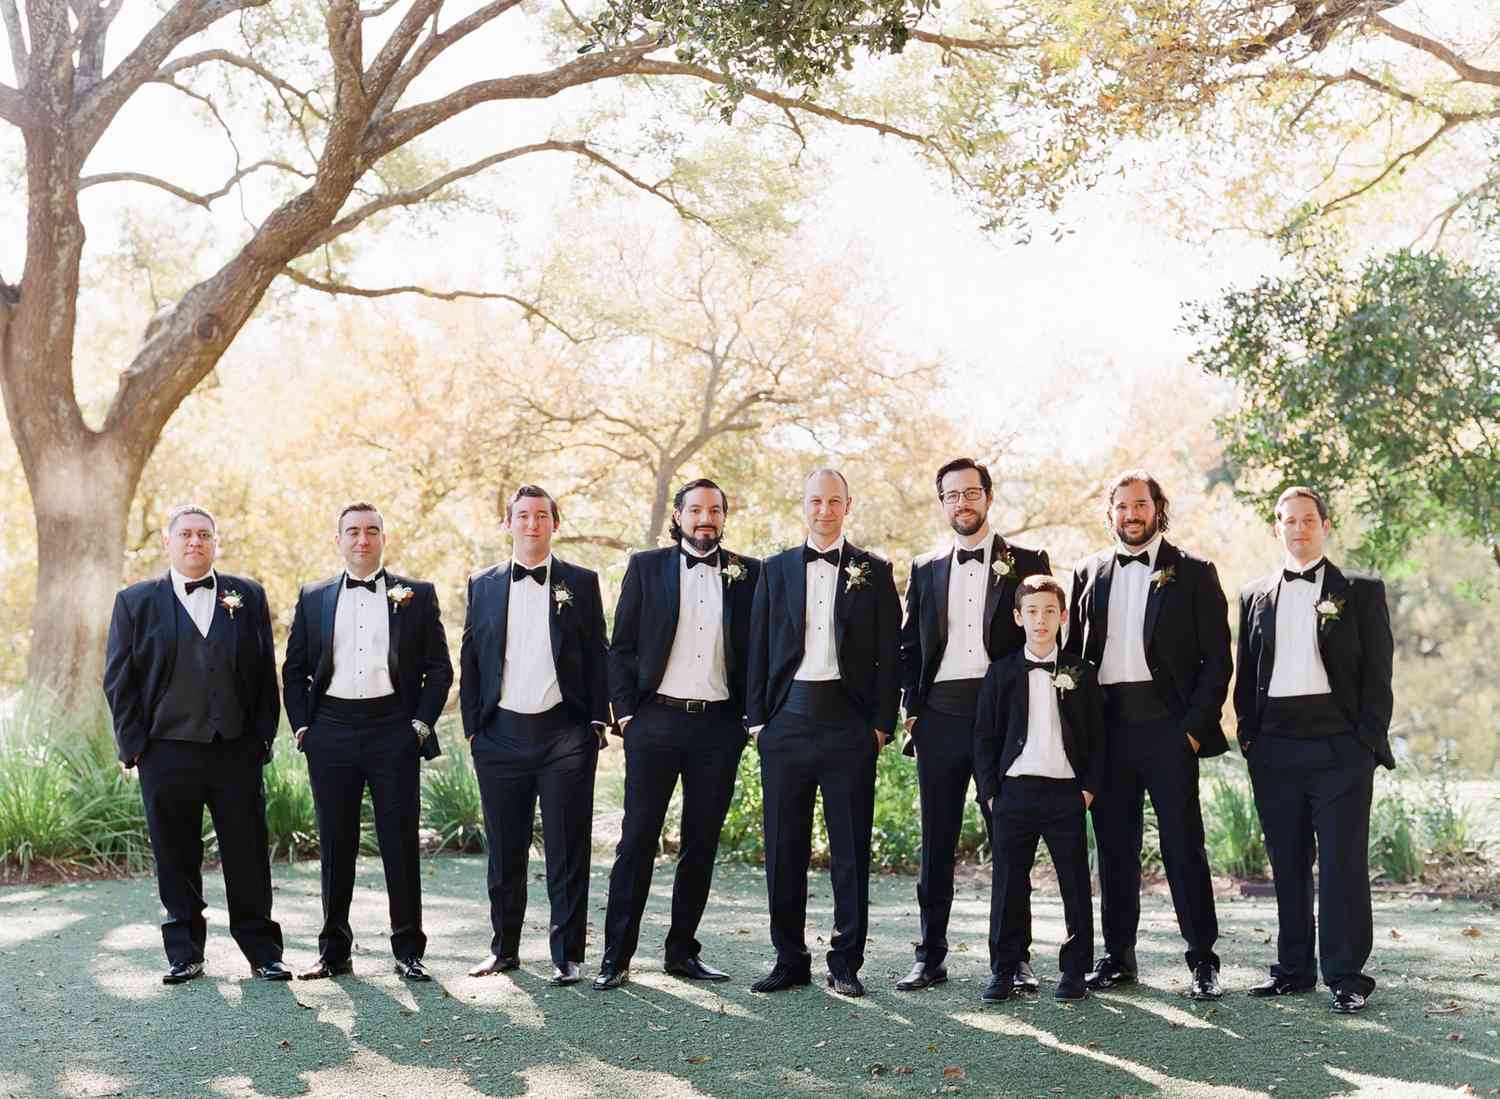 wedding groomsmen in black suits and bowties